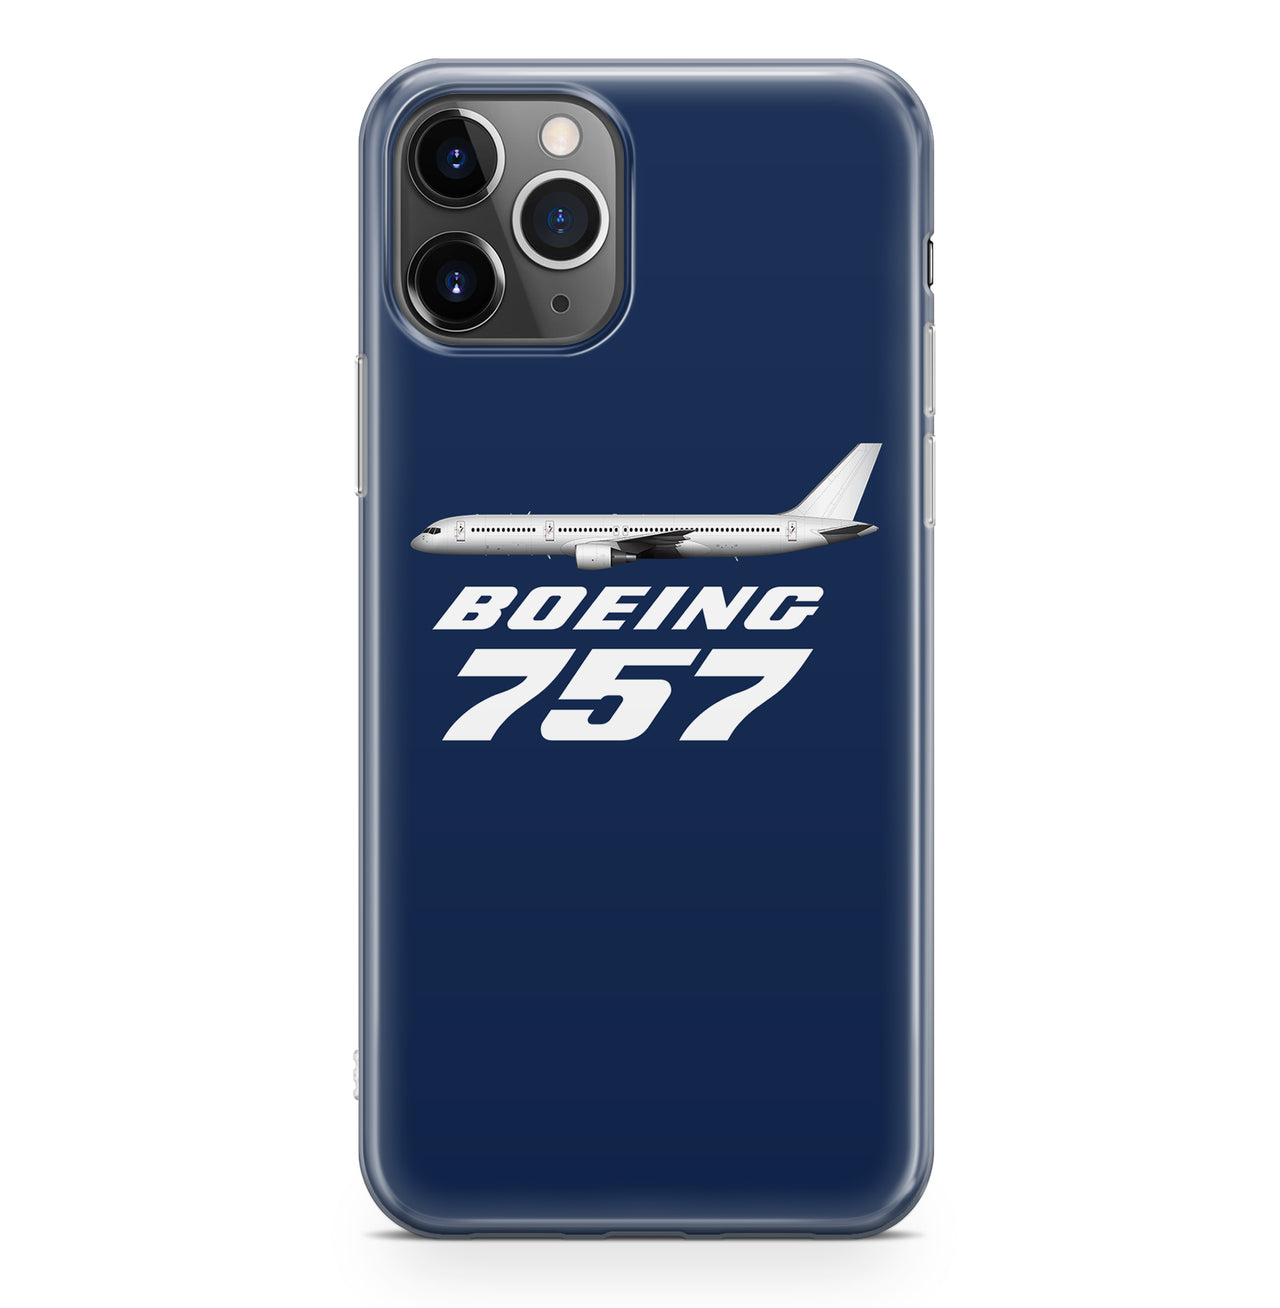 The Boeing 757 Designed iPhone Cases